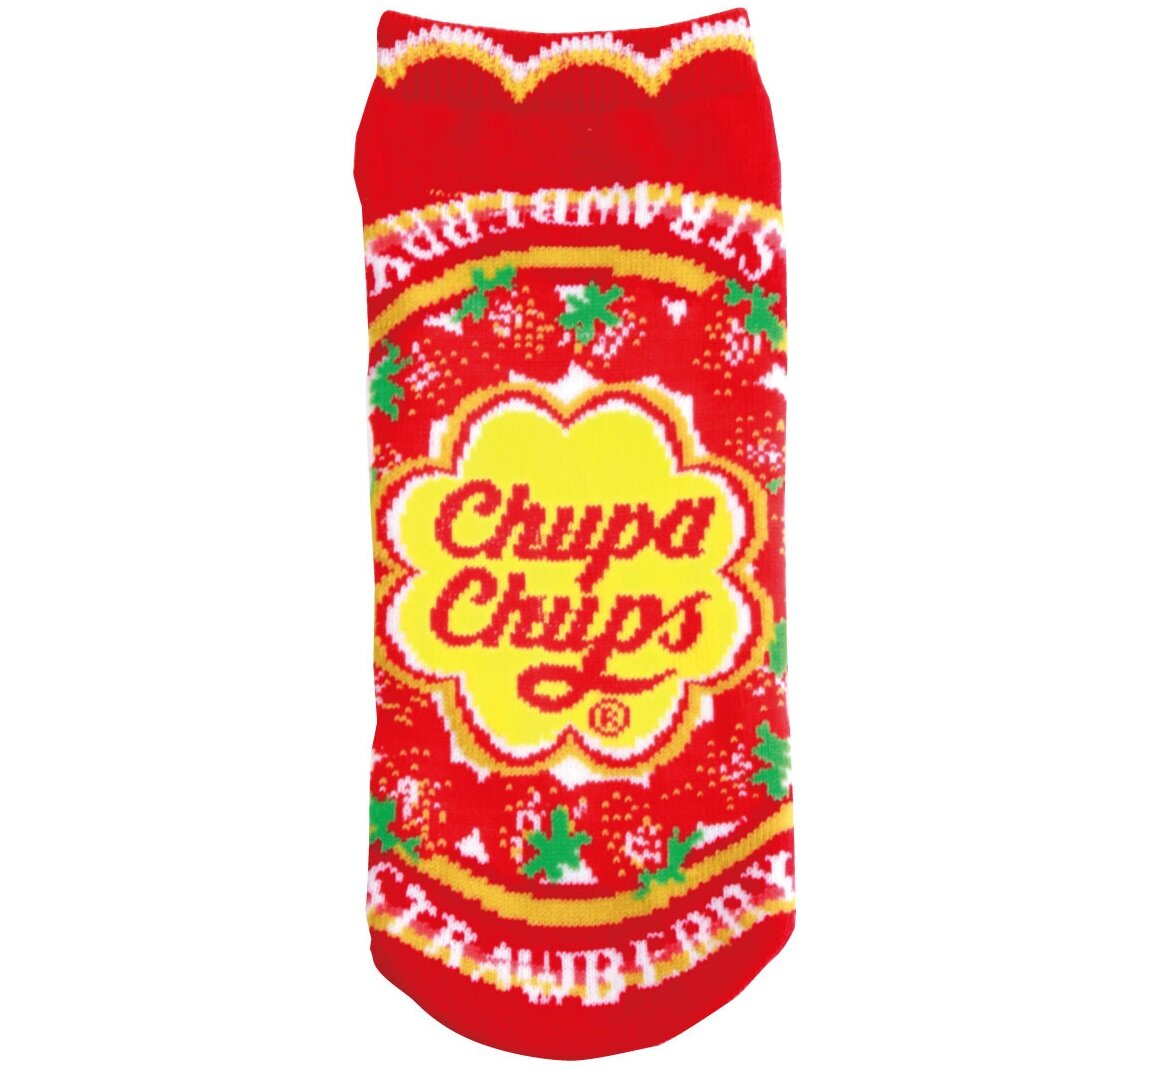 Ankelstrumpor - Chupa Chups Strawberry